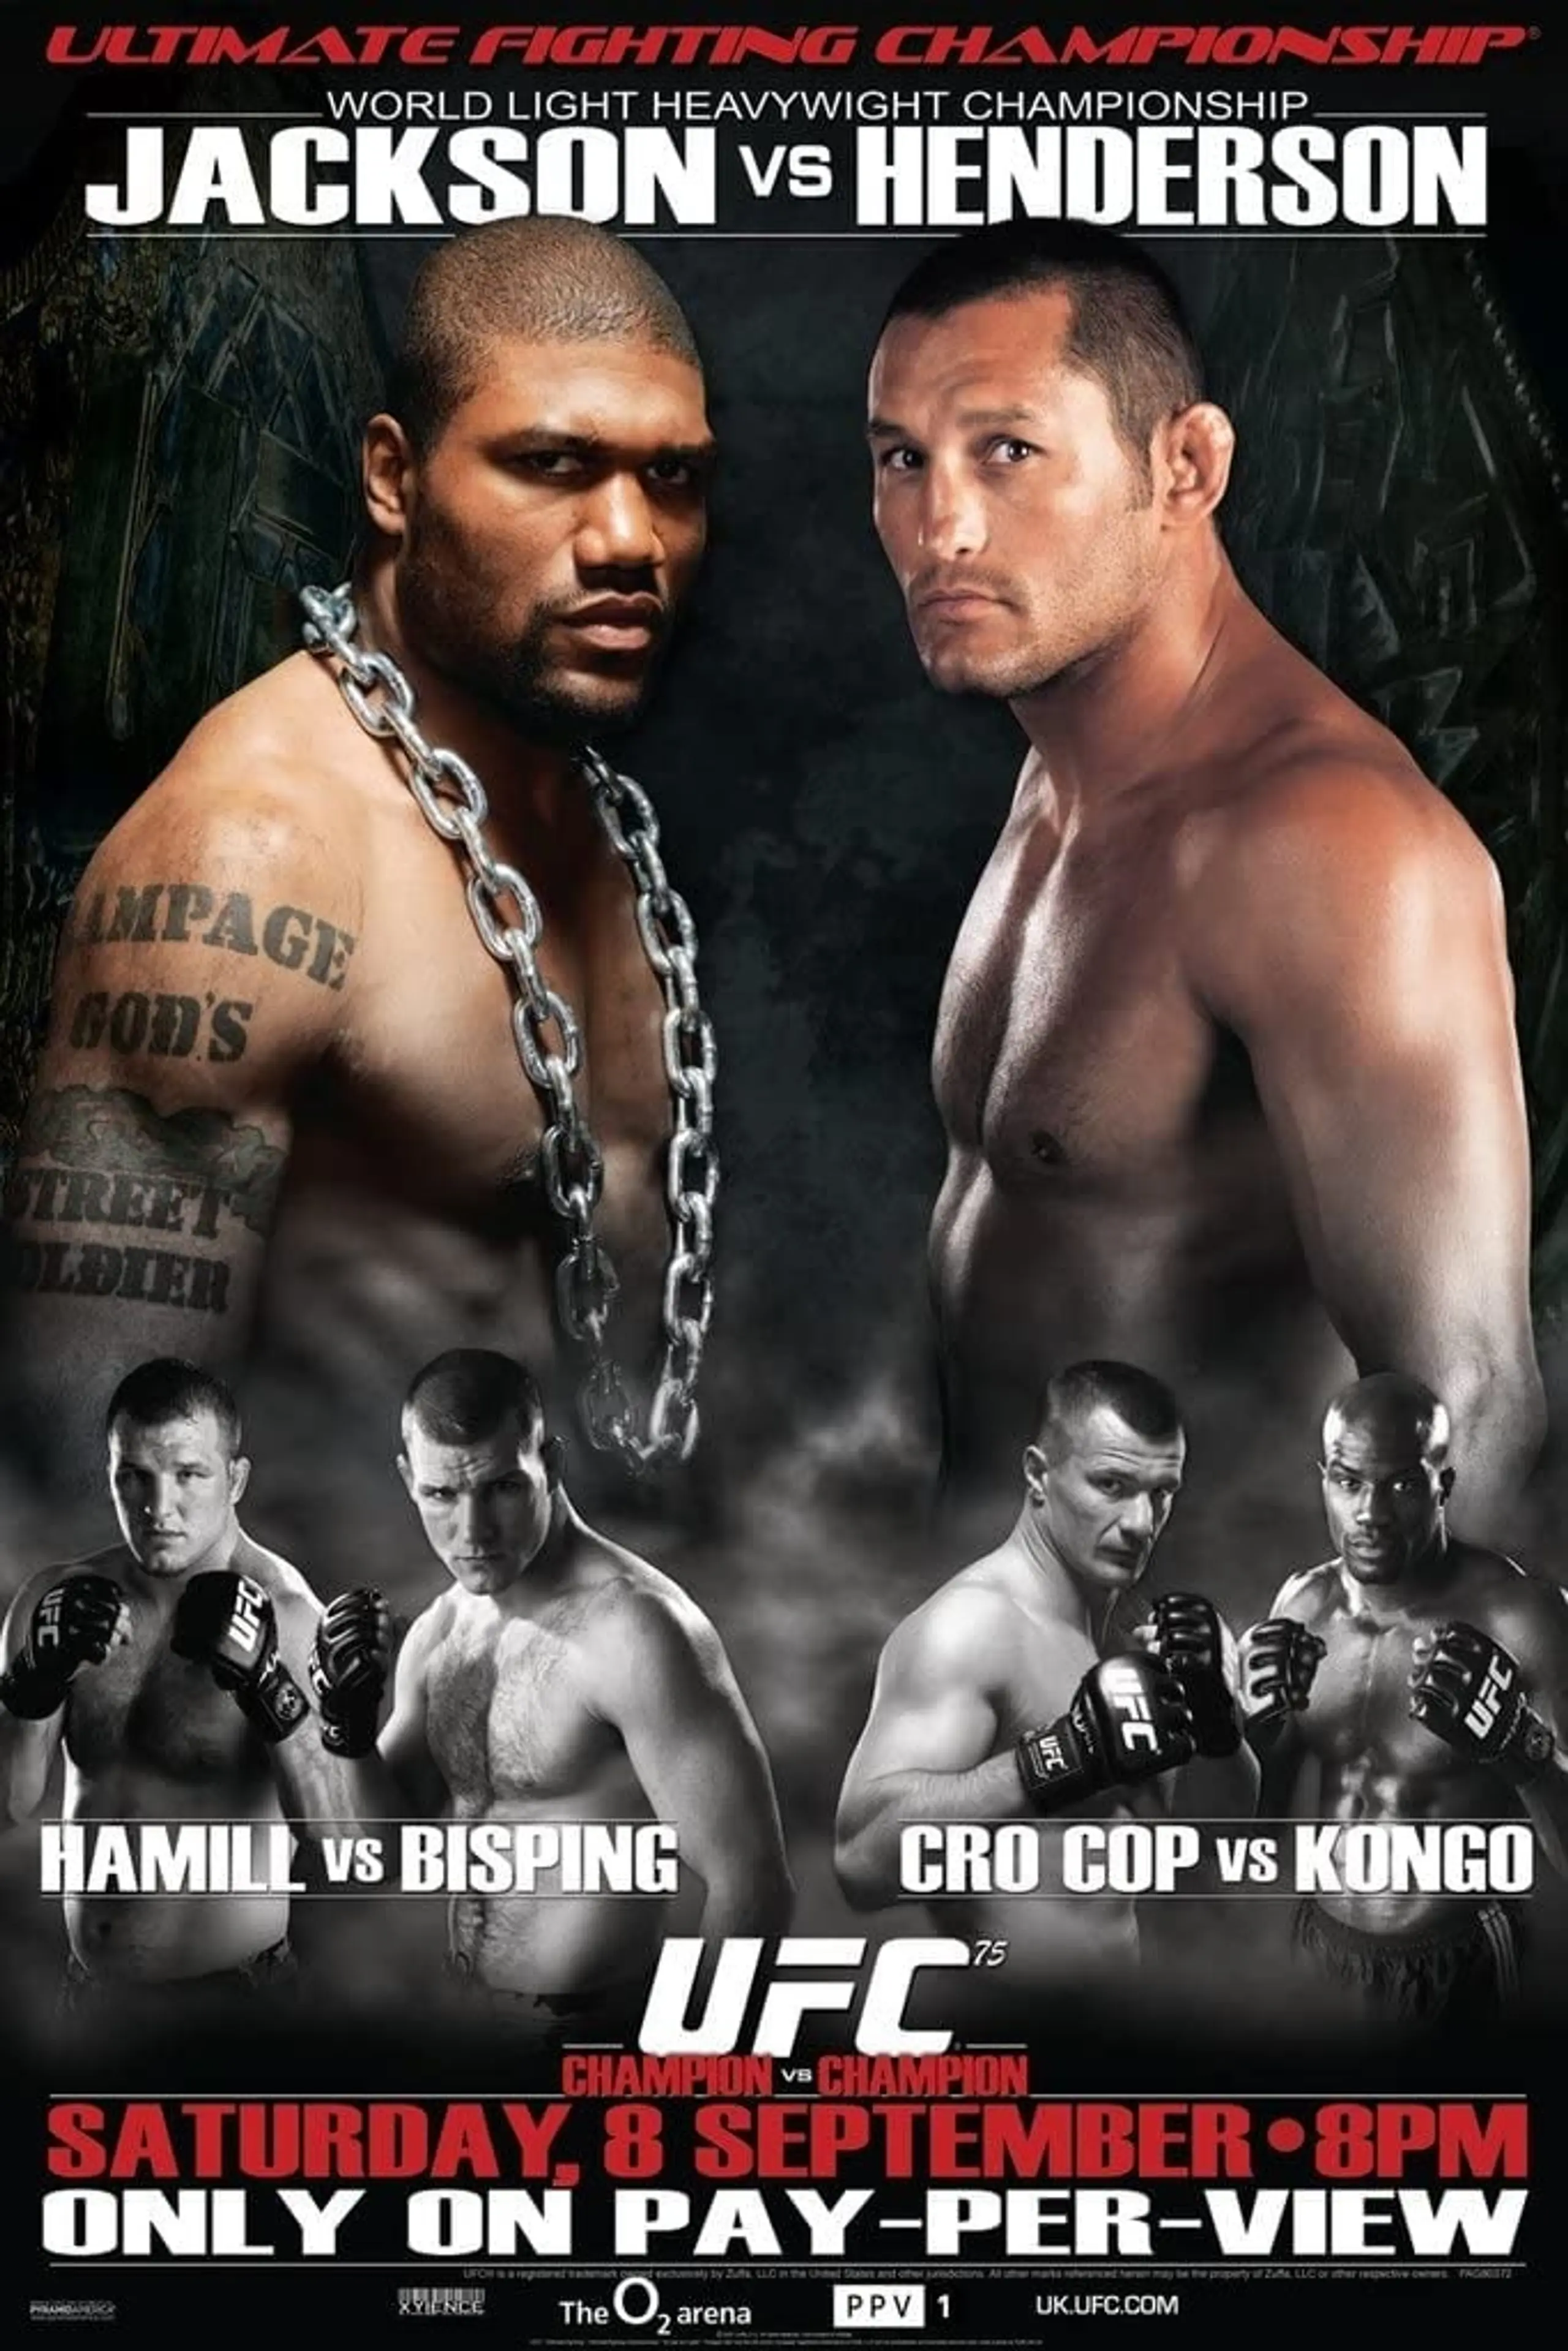 UFC 75: Champion vs. Champion